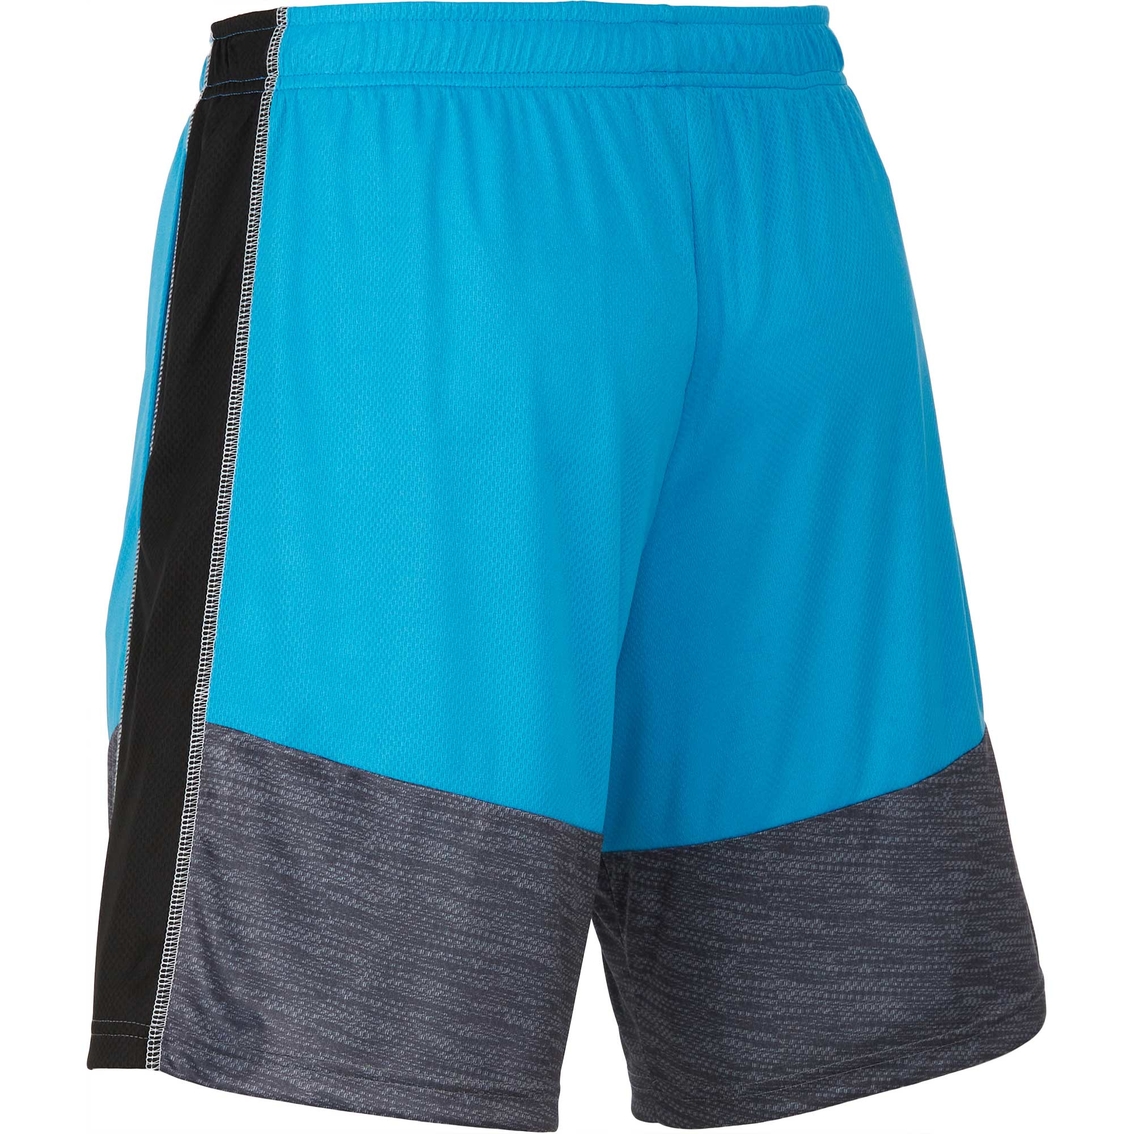 Pbx Pro Running Shorts | Shorts | Clothing & Accessories | Shop The ...